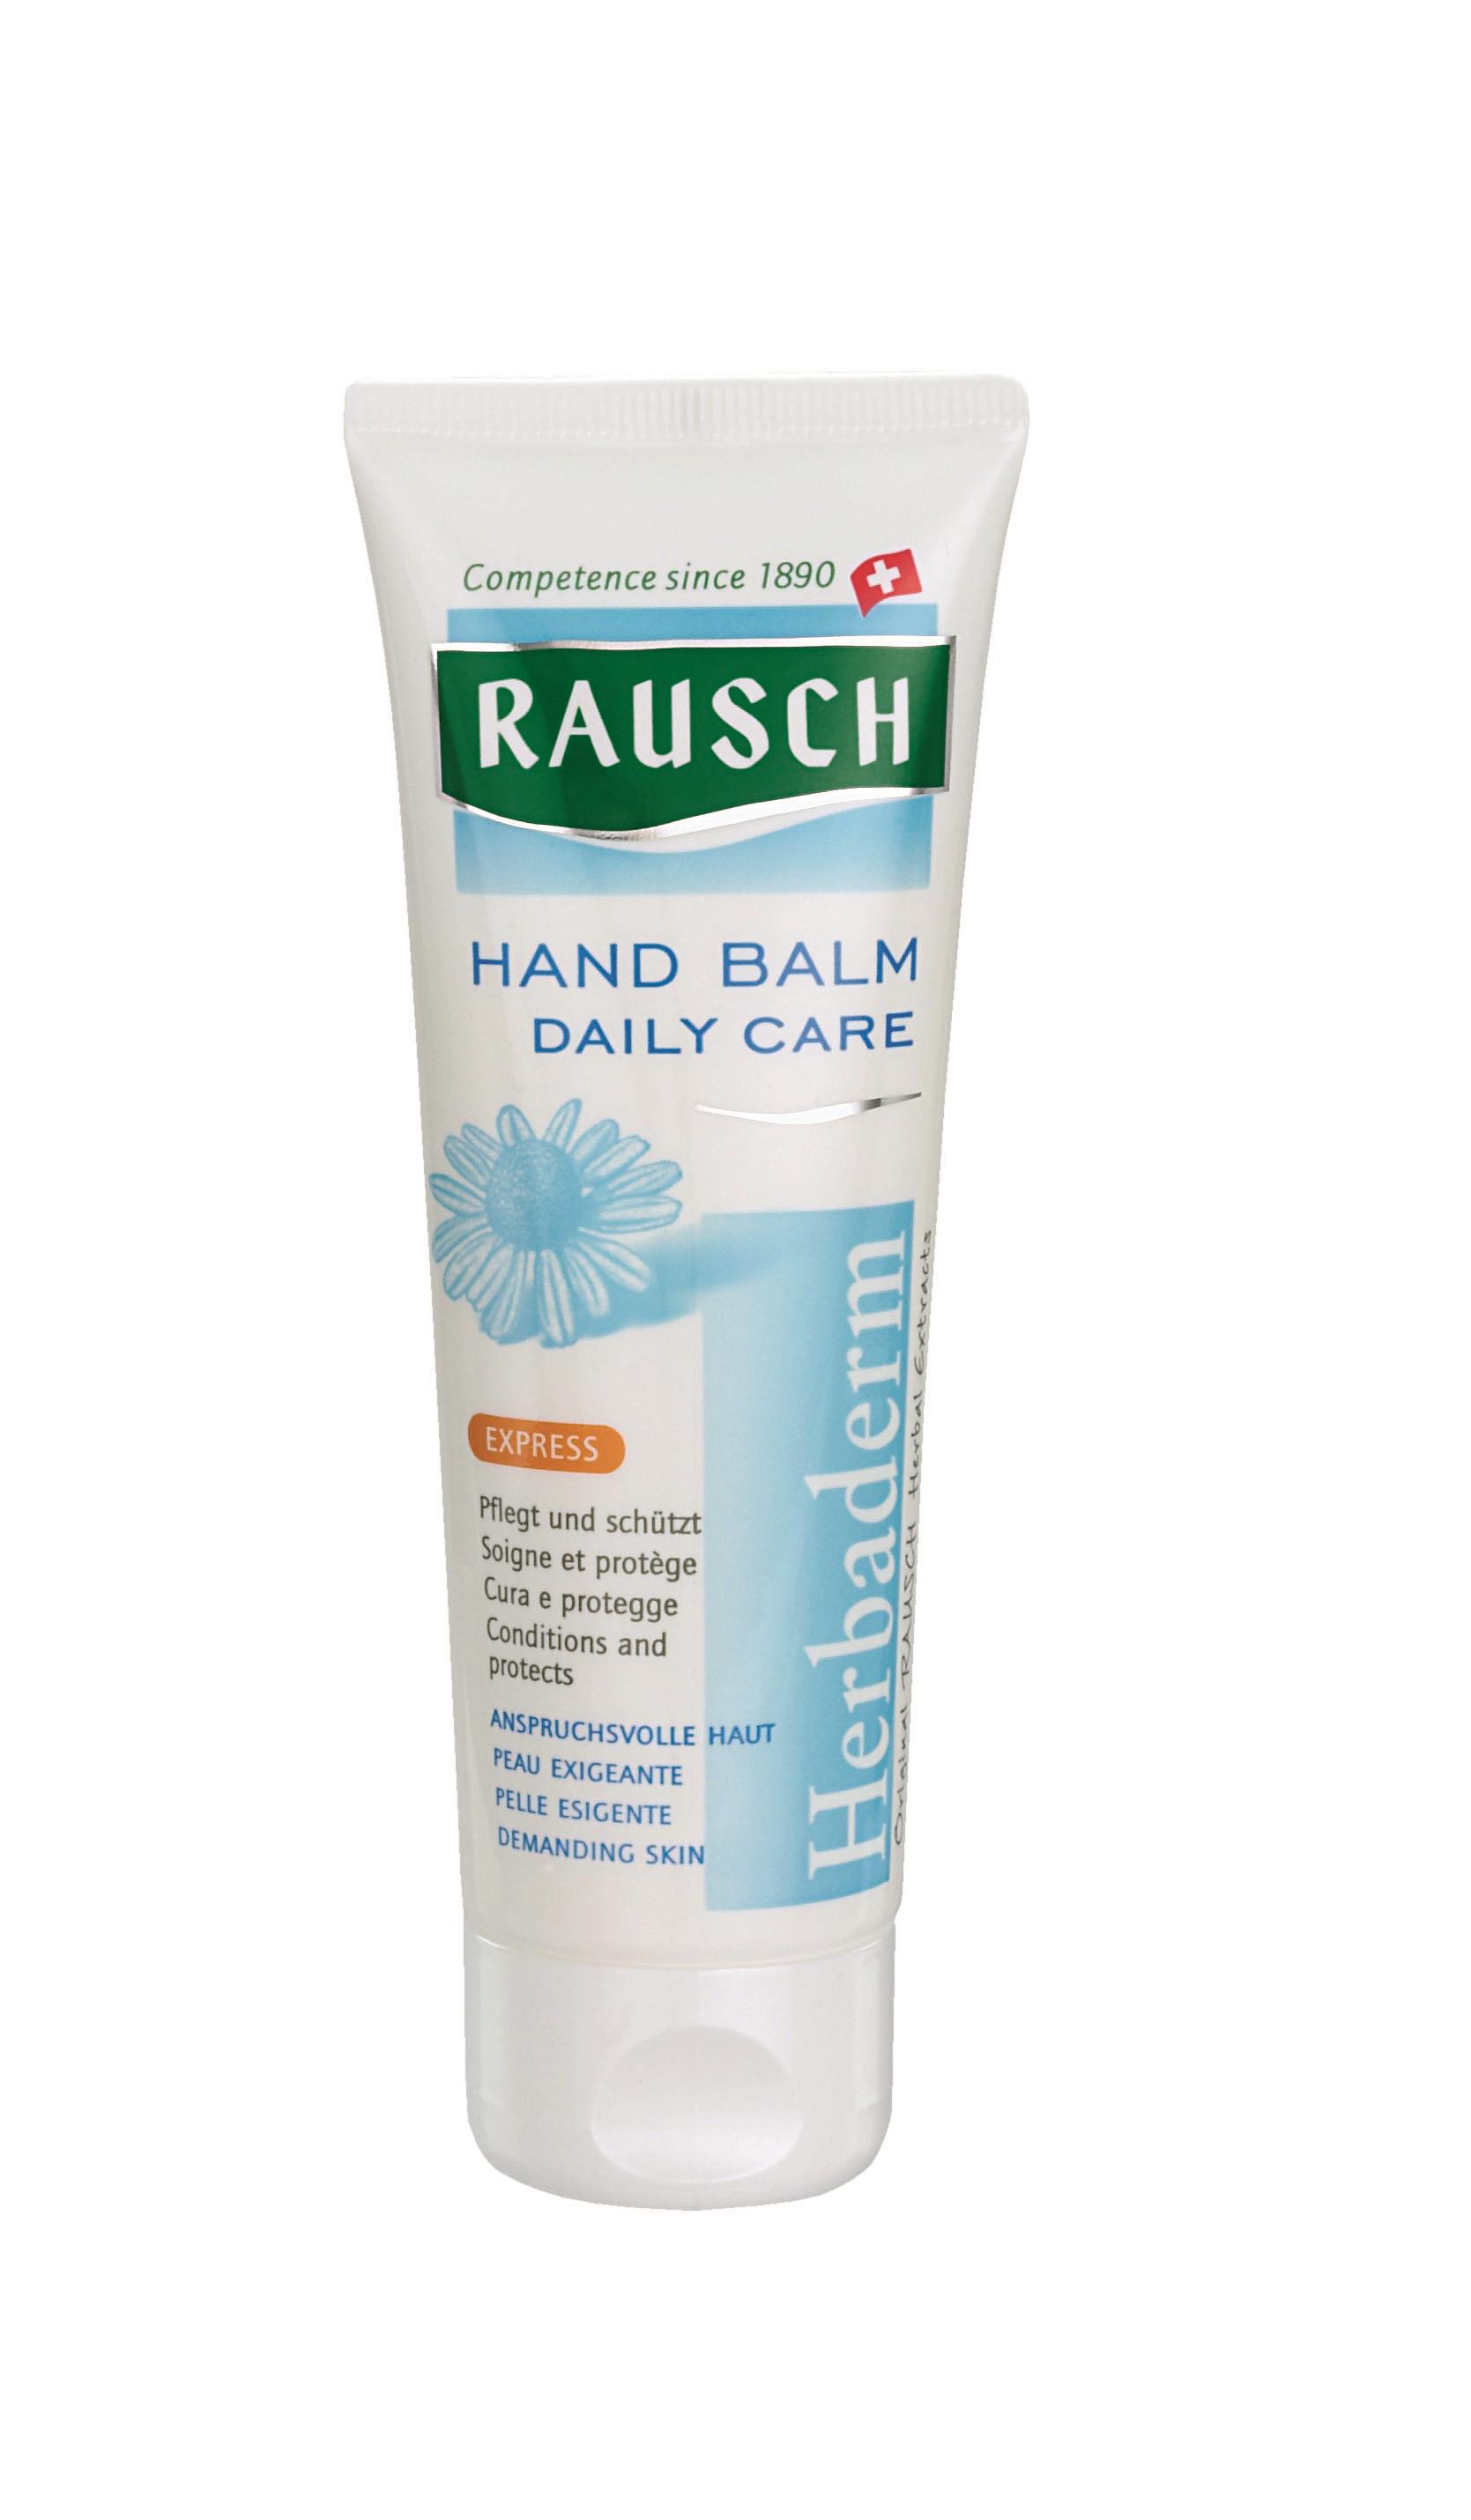 Rausch Hand Balm Daily Care